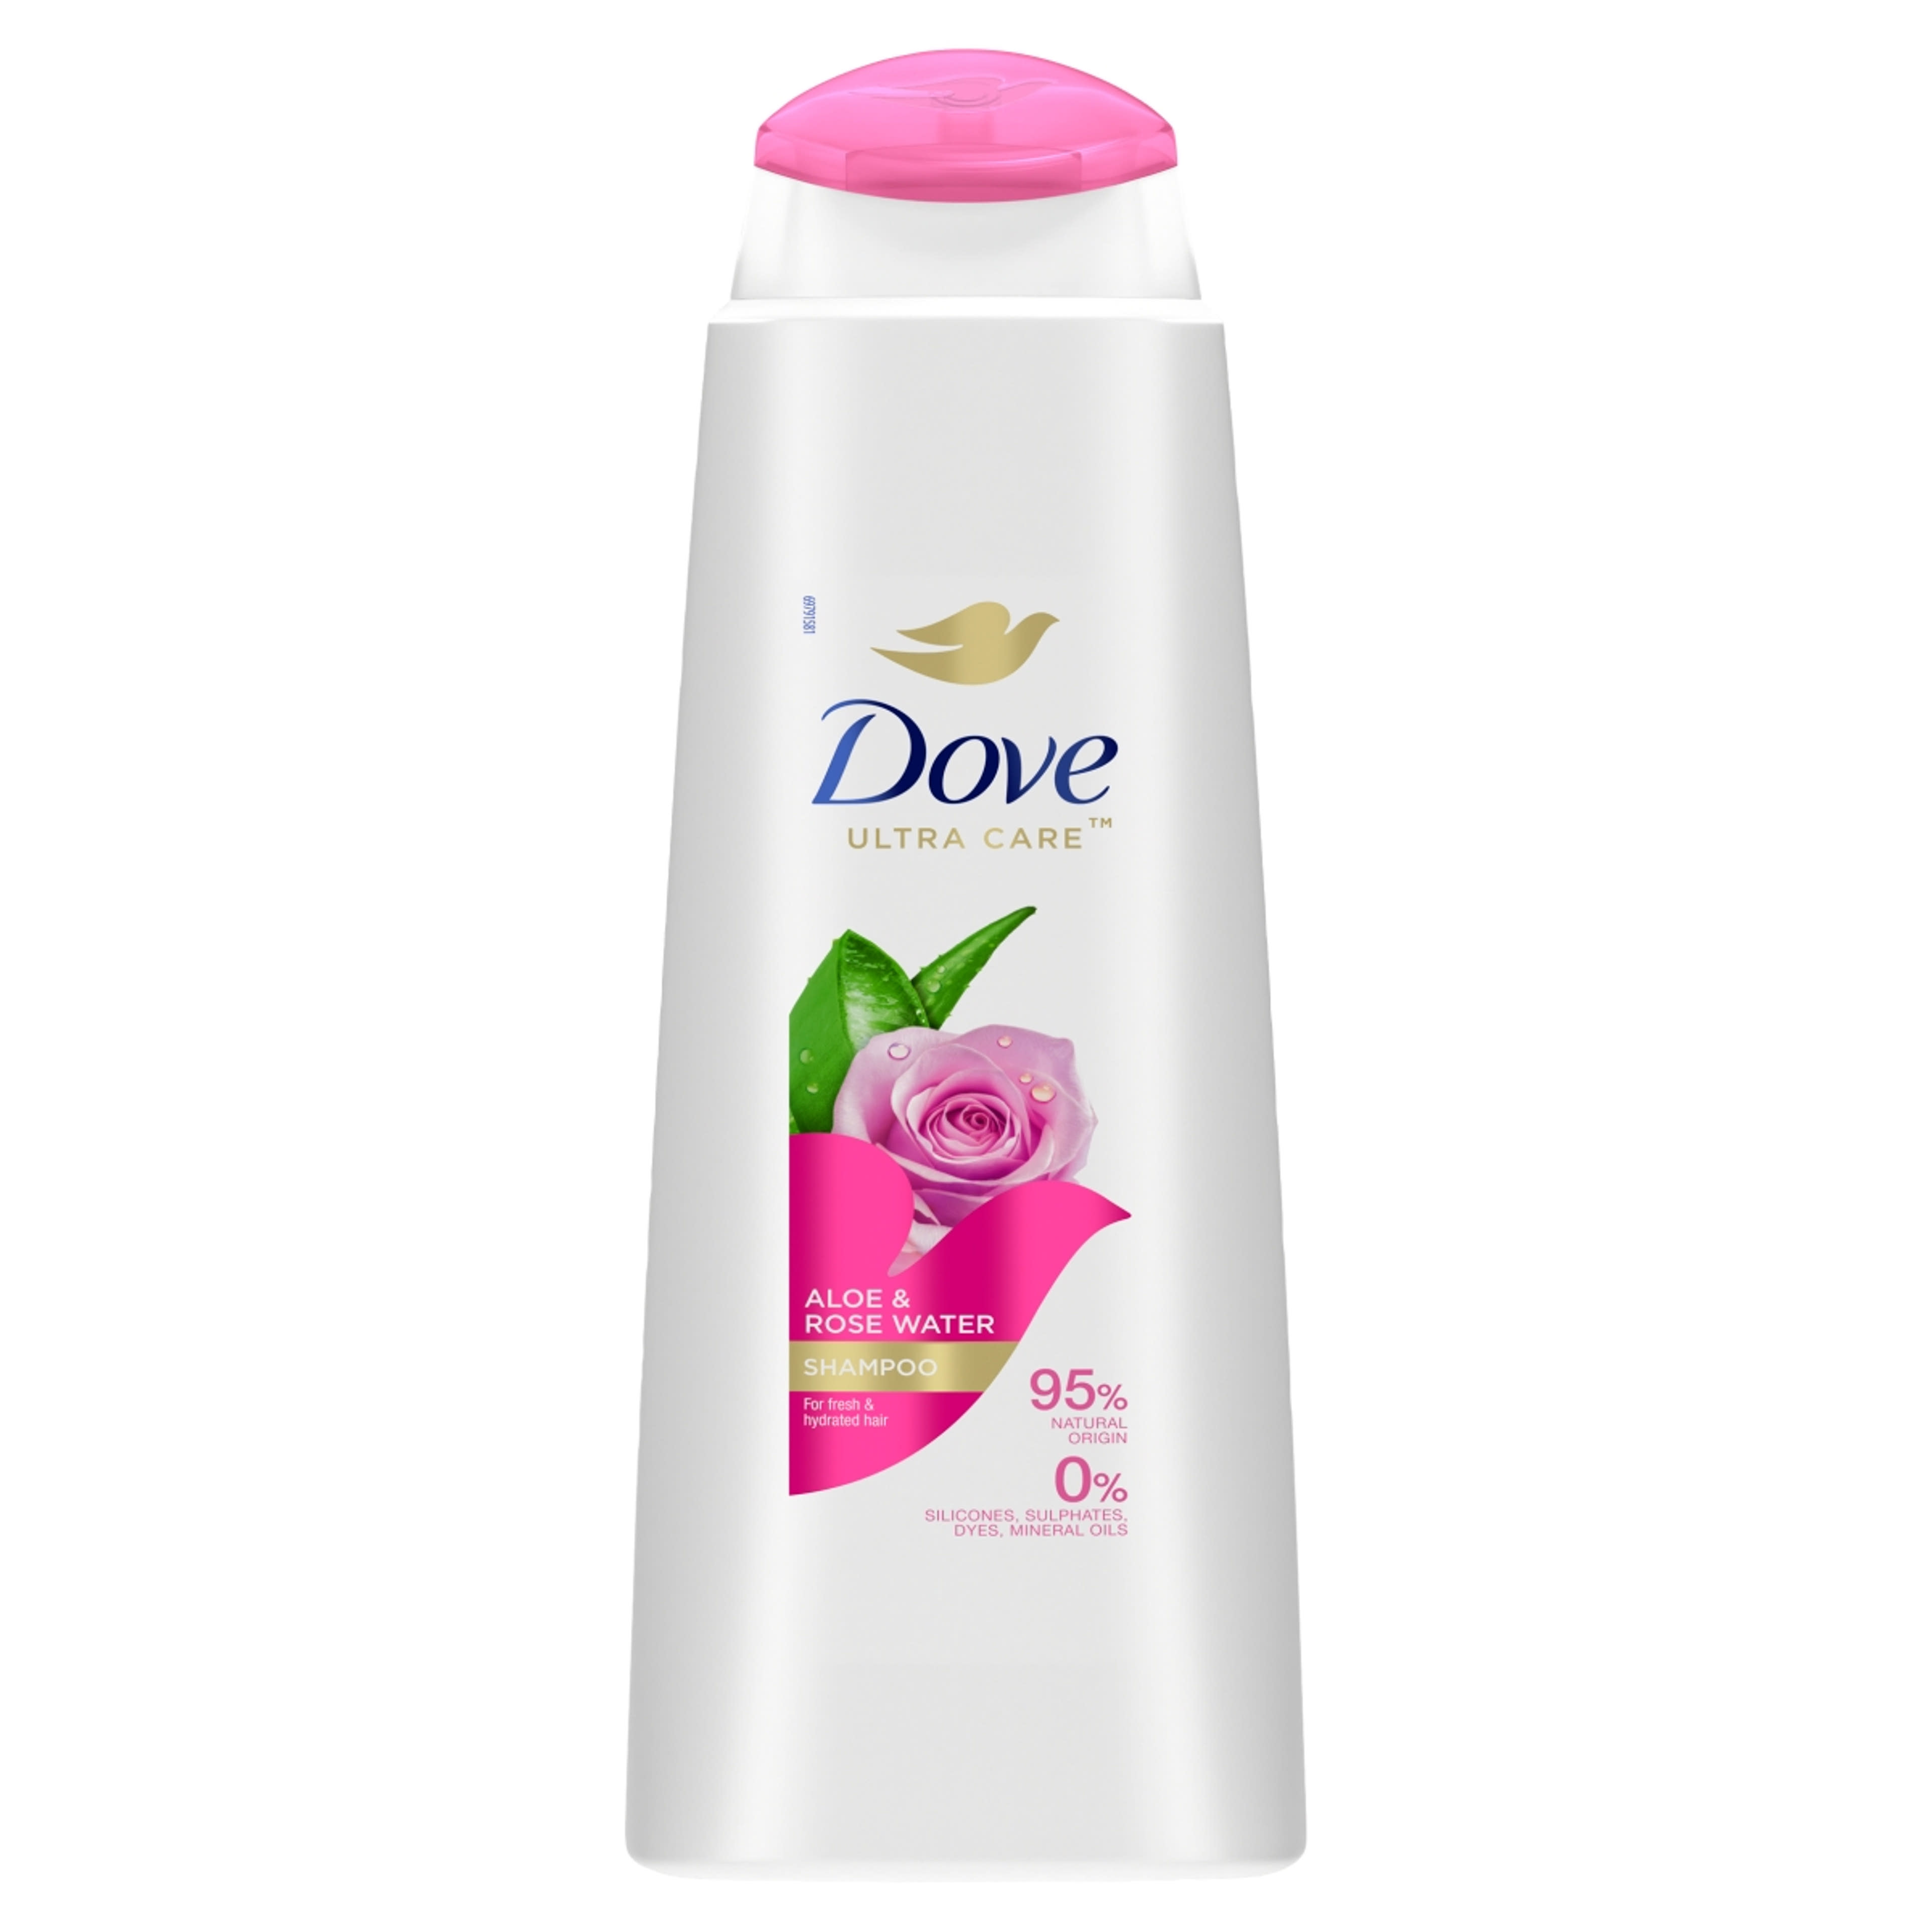 Dove Aloe Vera&Rose Water sampon száraz hajra - 400 ml